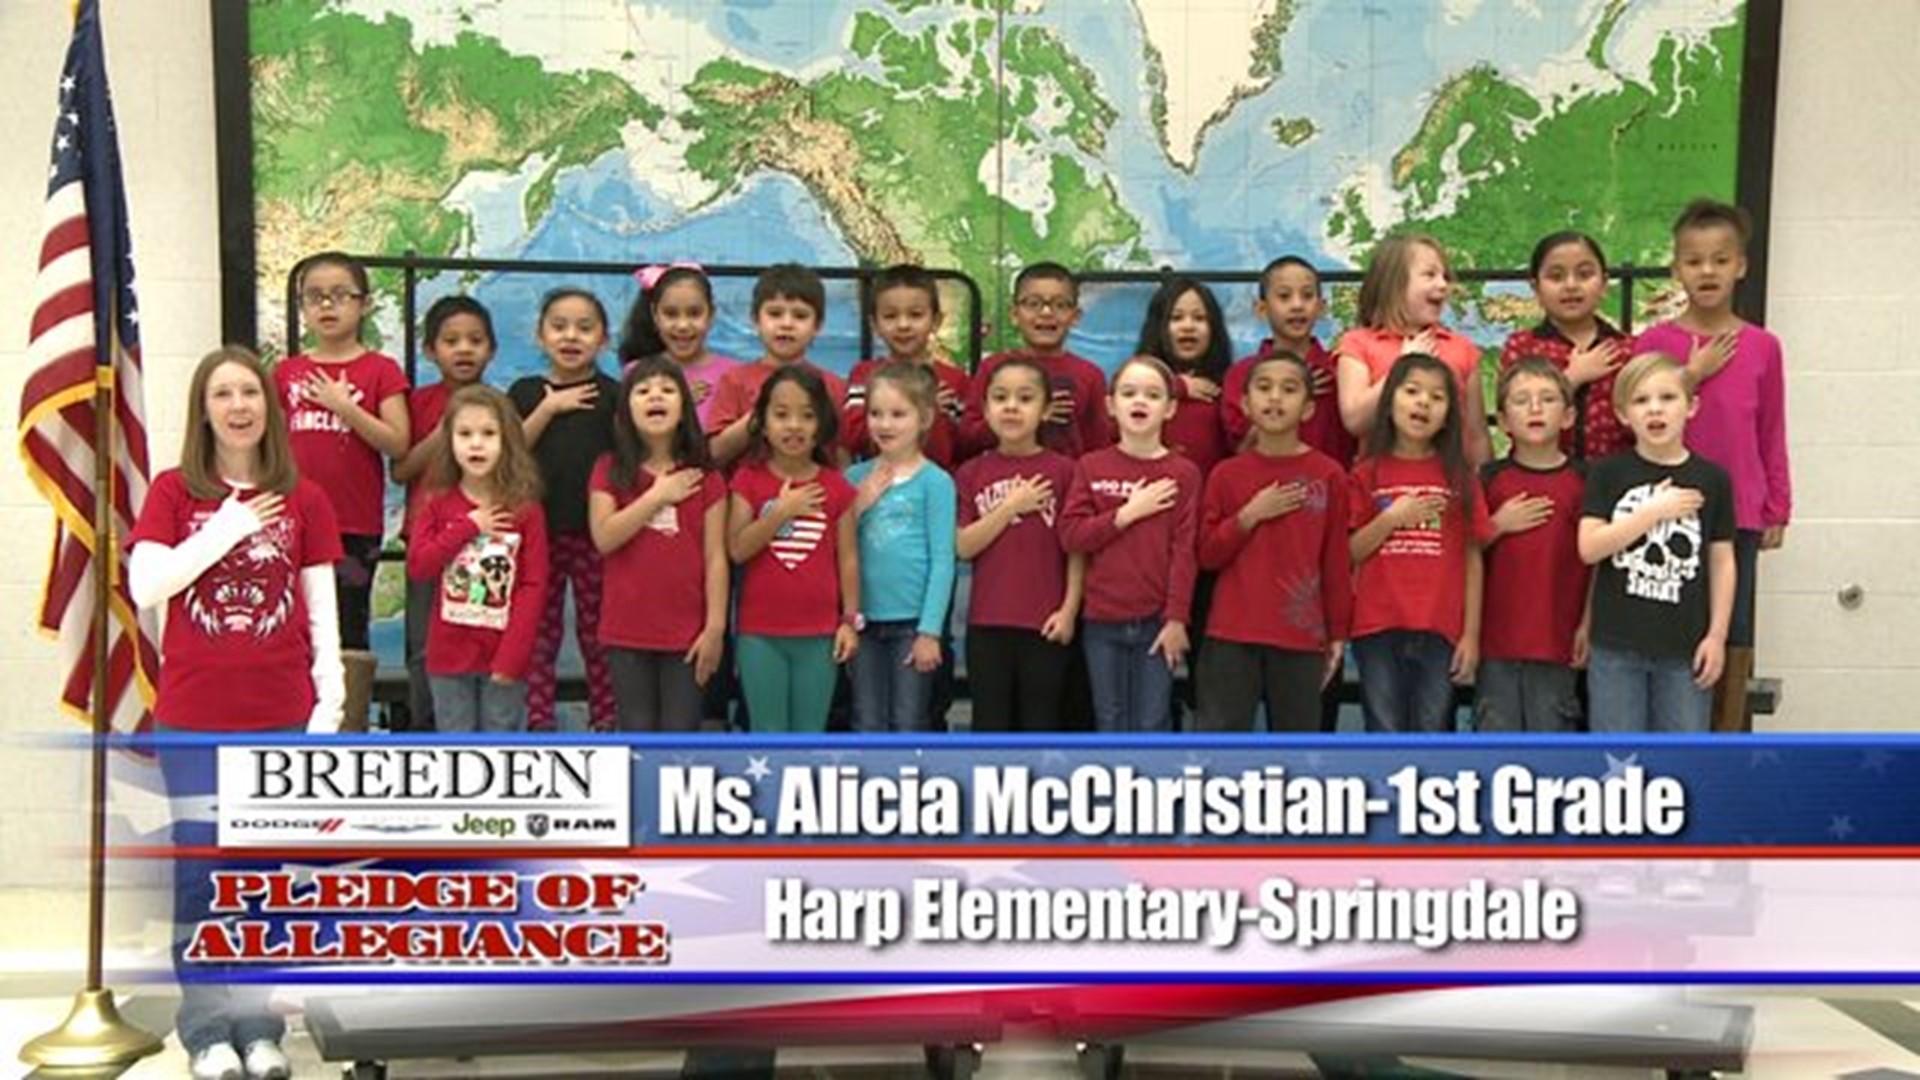 Harp Elementary, Springdale - Ms. Alicia McChristian - 1st Grade